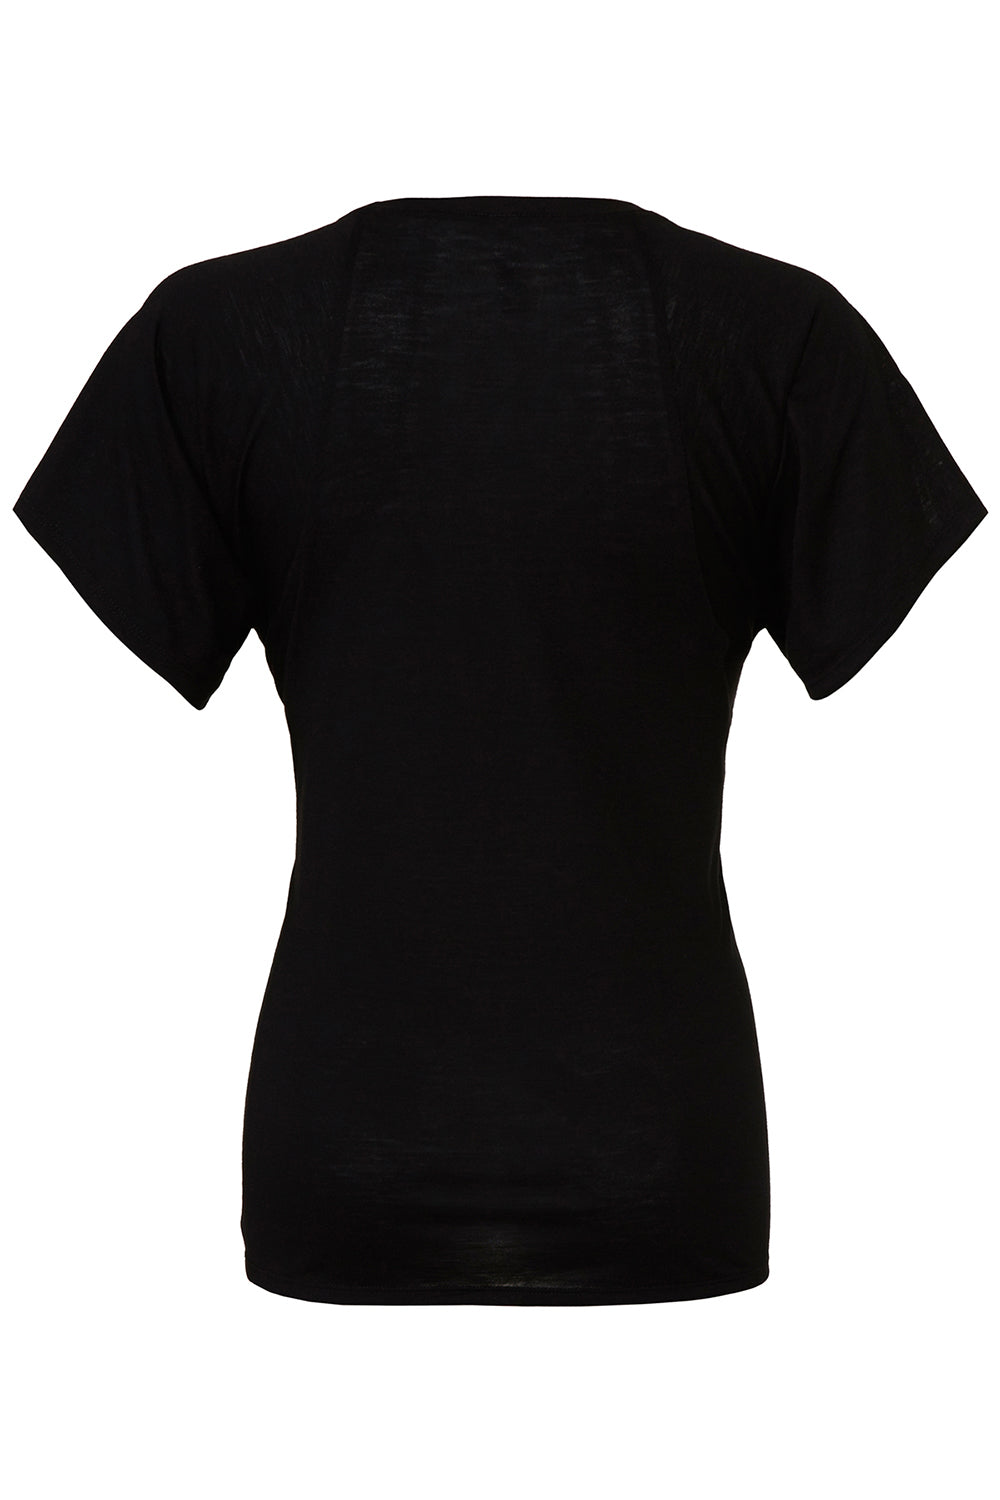 Bella + Canvas B8801/8801 Womens Flowy Short Sleeve Scoop Neck T-Shirt Black Flat Back